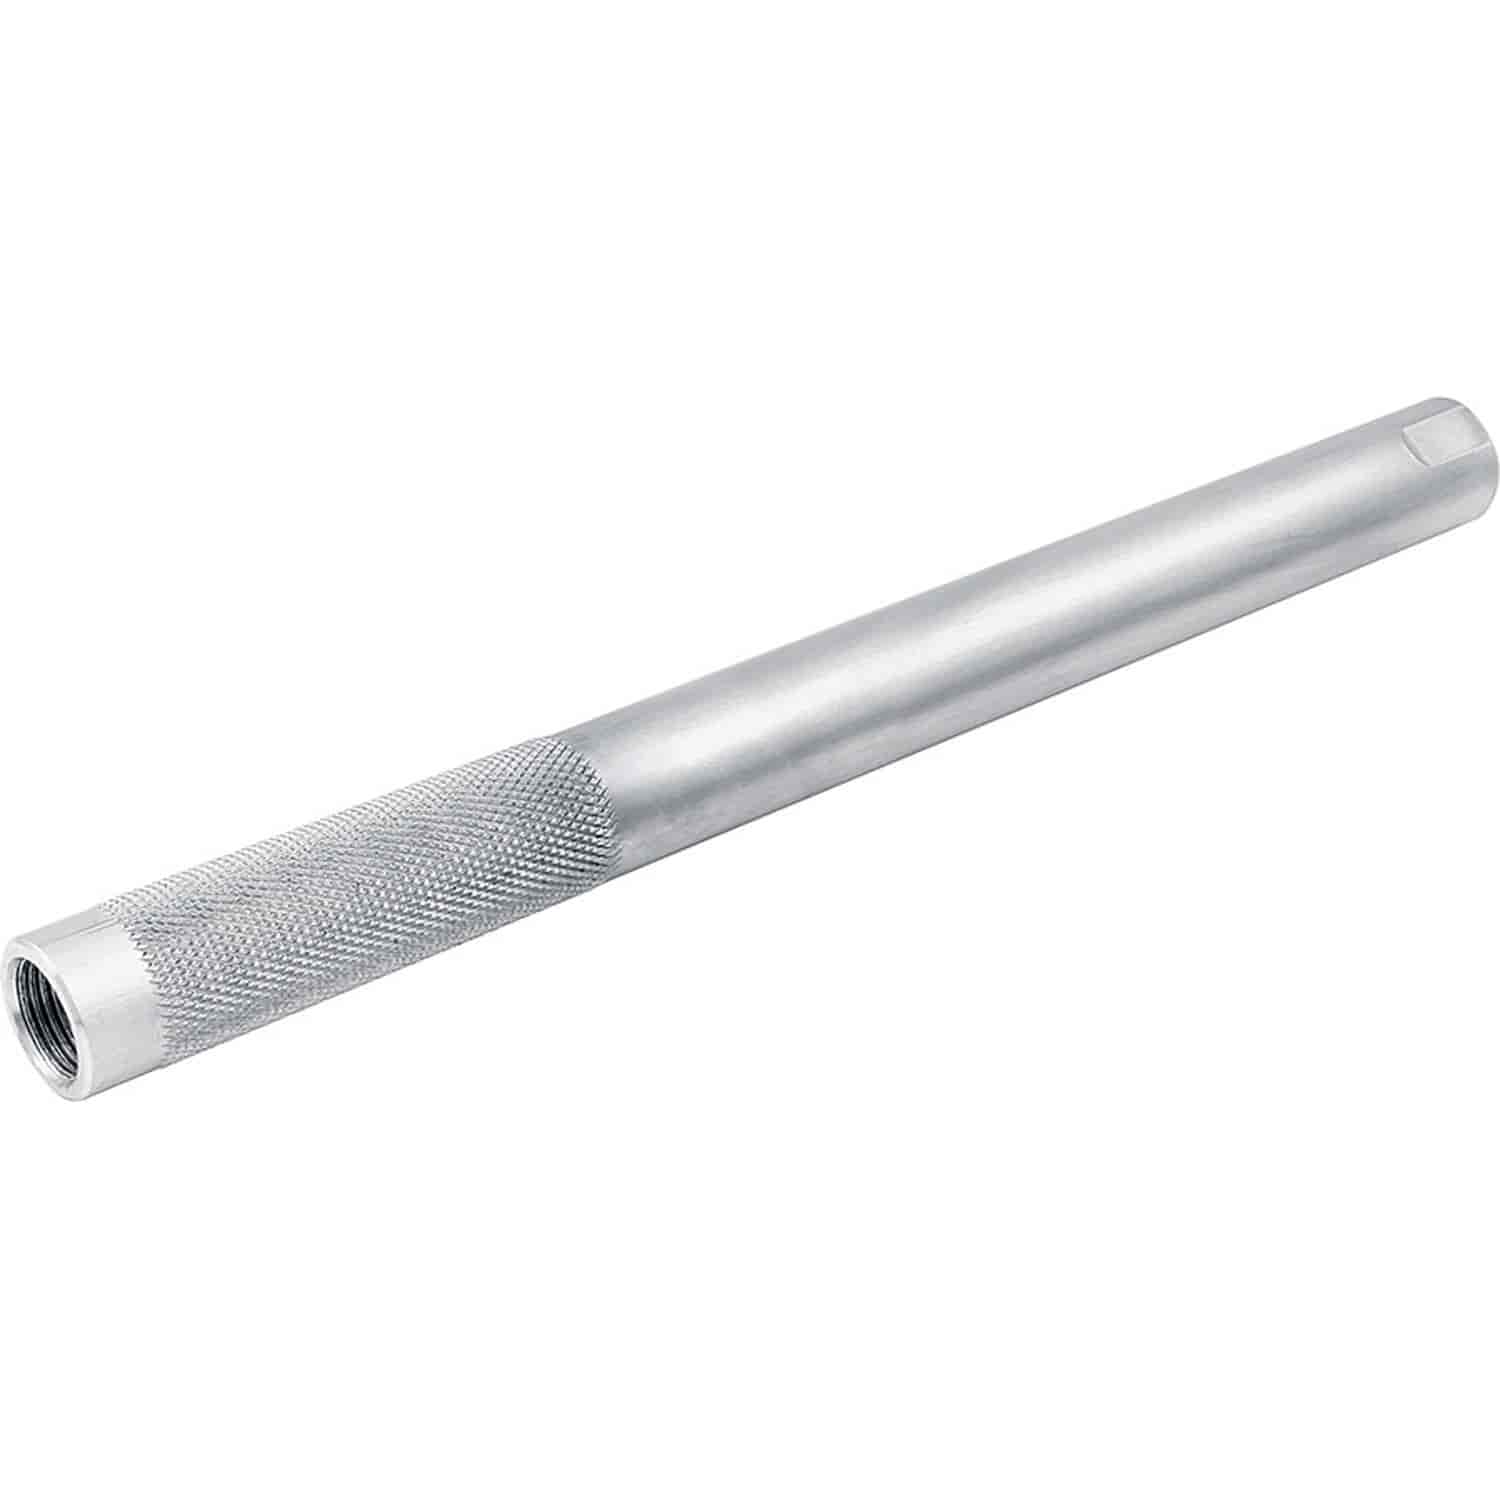 Swedged Aluminum Tie Rod Tube Length: 15